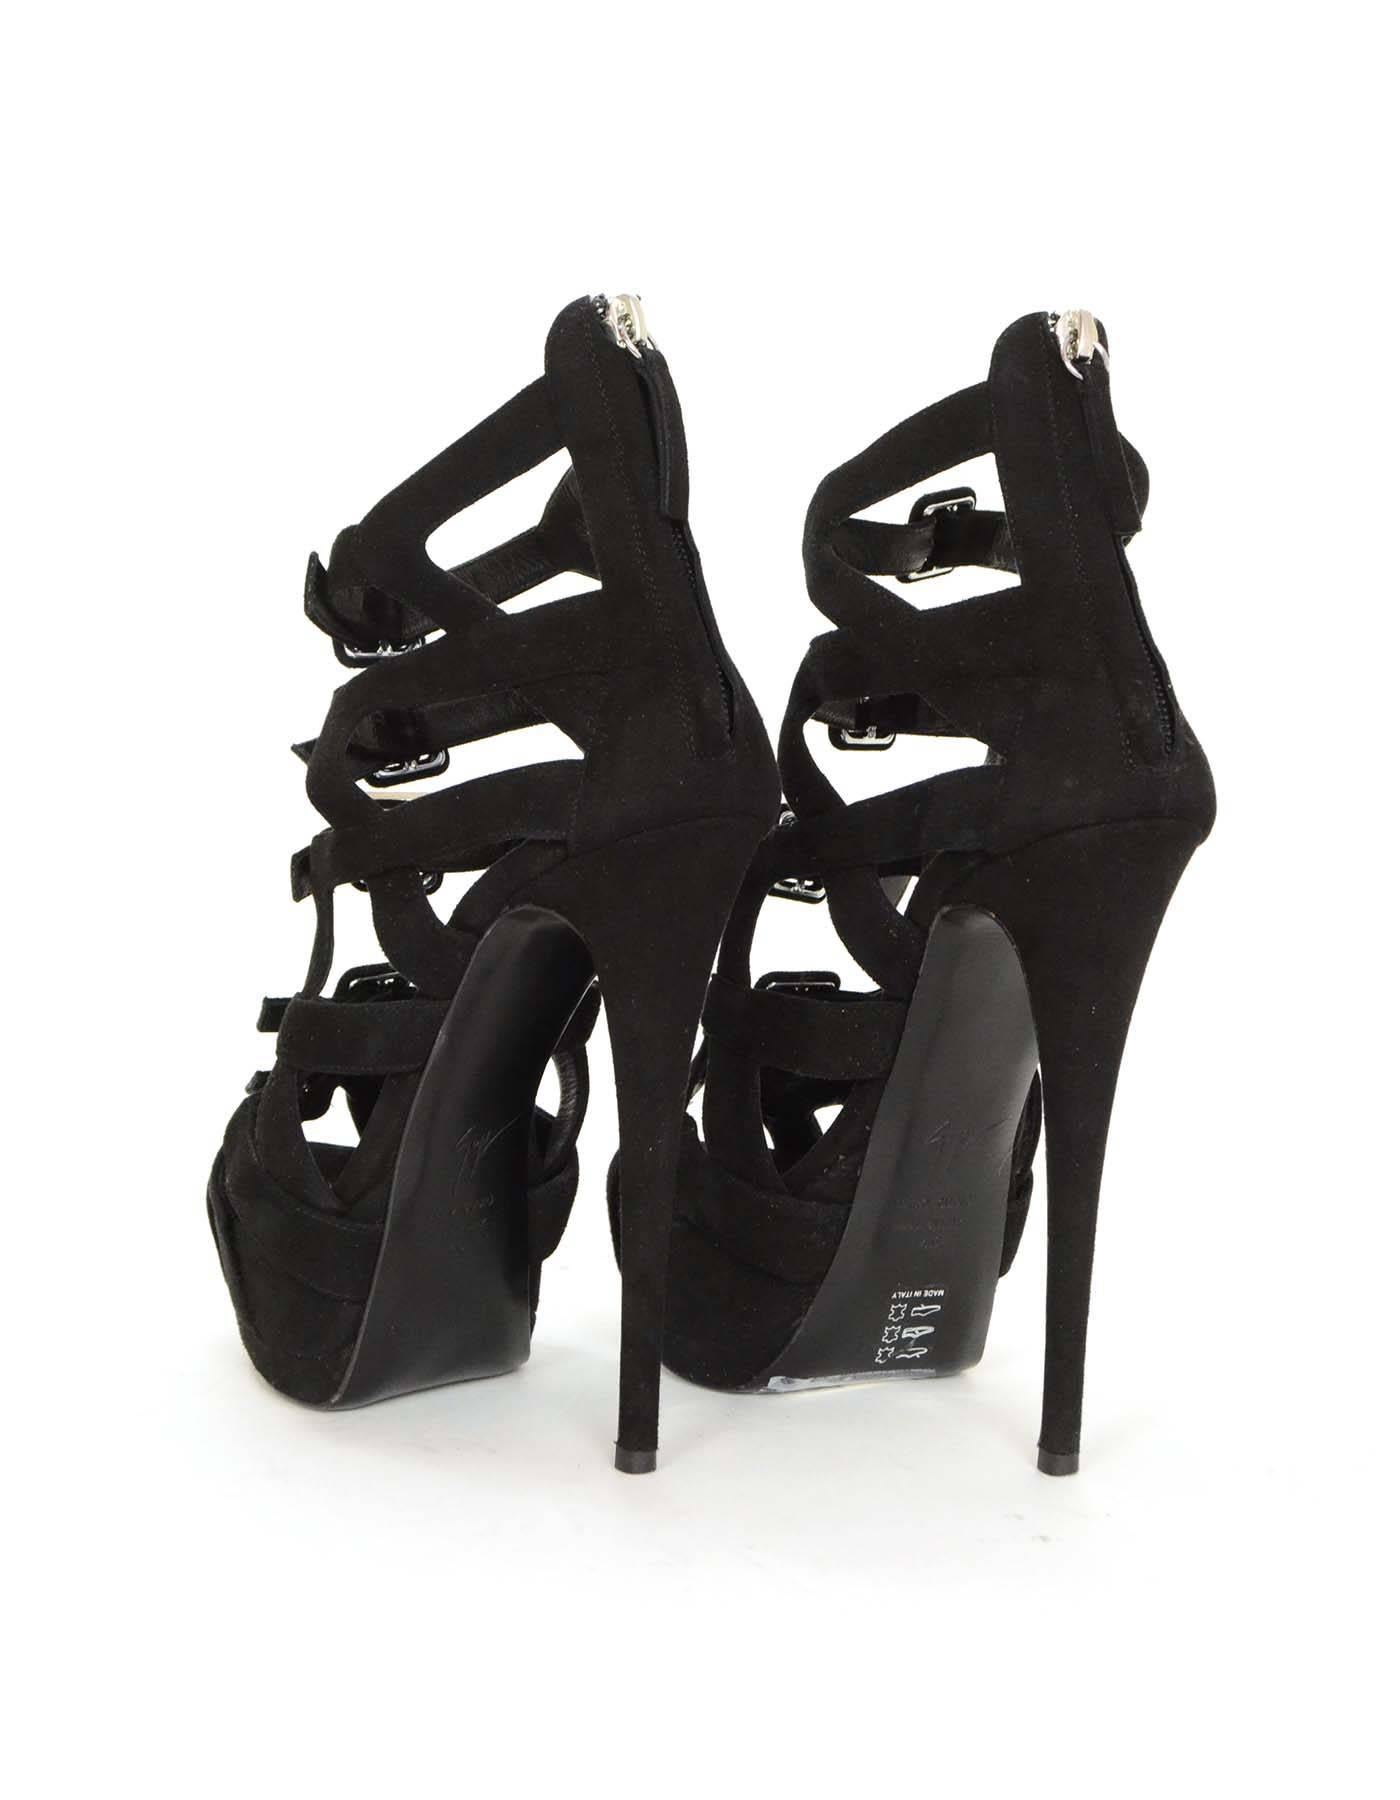 Women's Giuseppe Zanotti Black Suede Strappy Platform Sandals sz 40